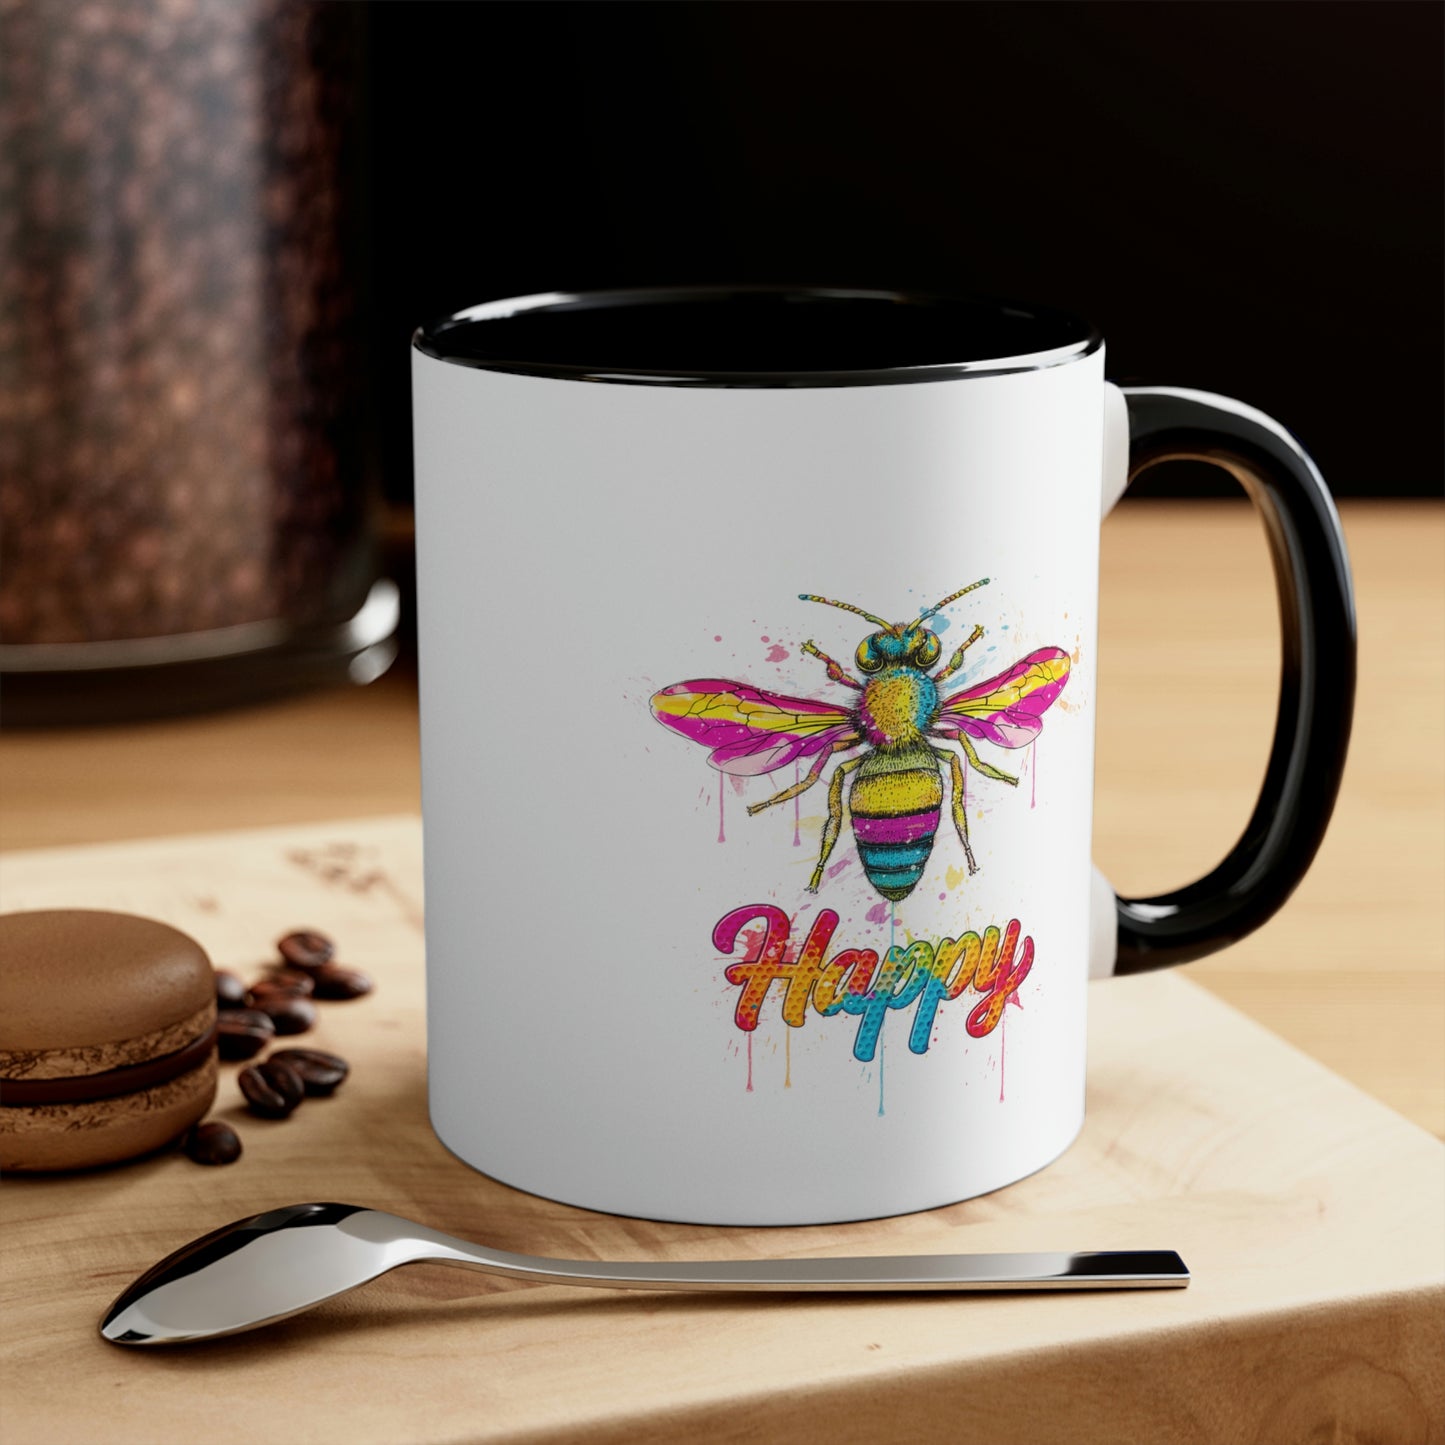 Bee Happy Accent Colour Mug, 11oz